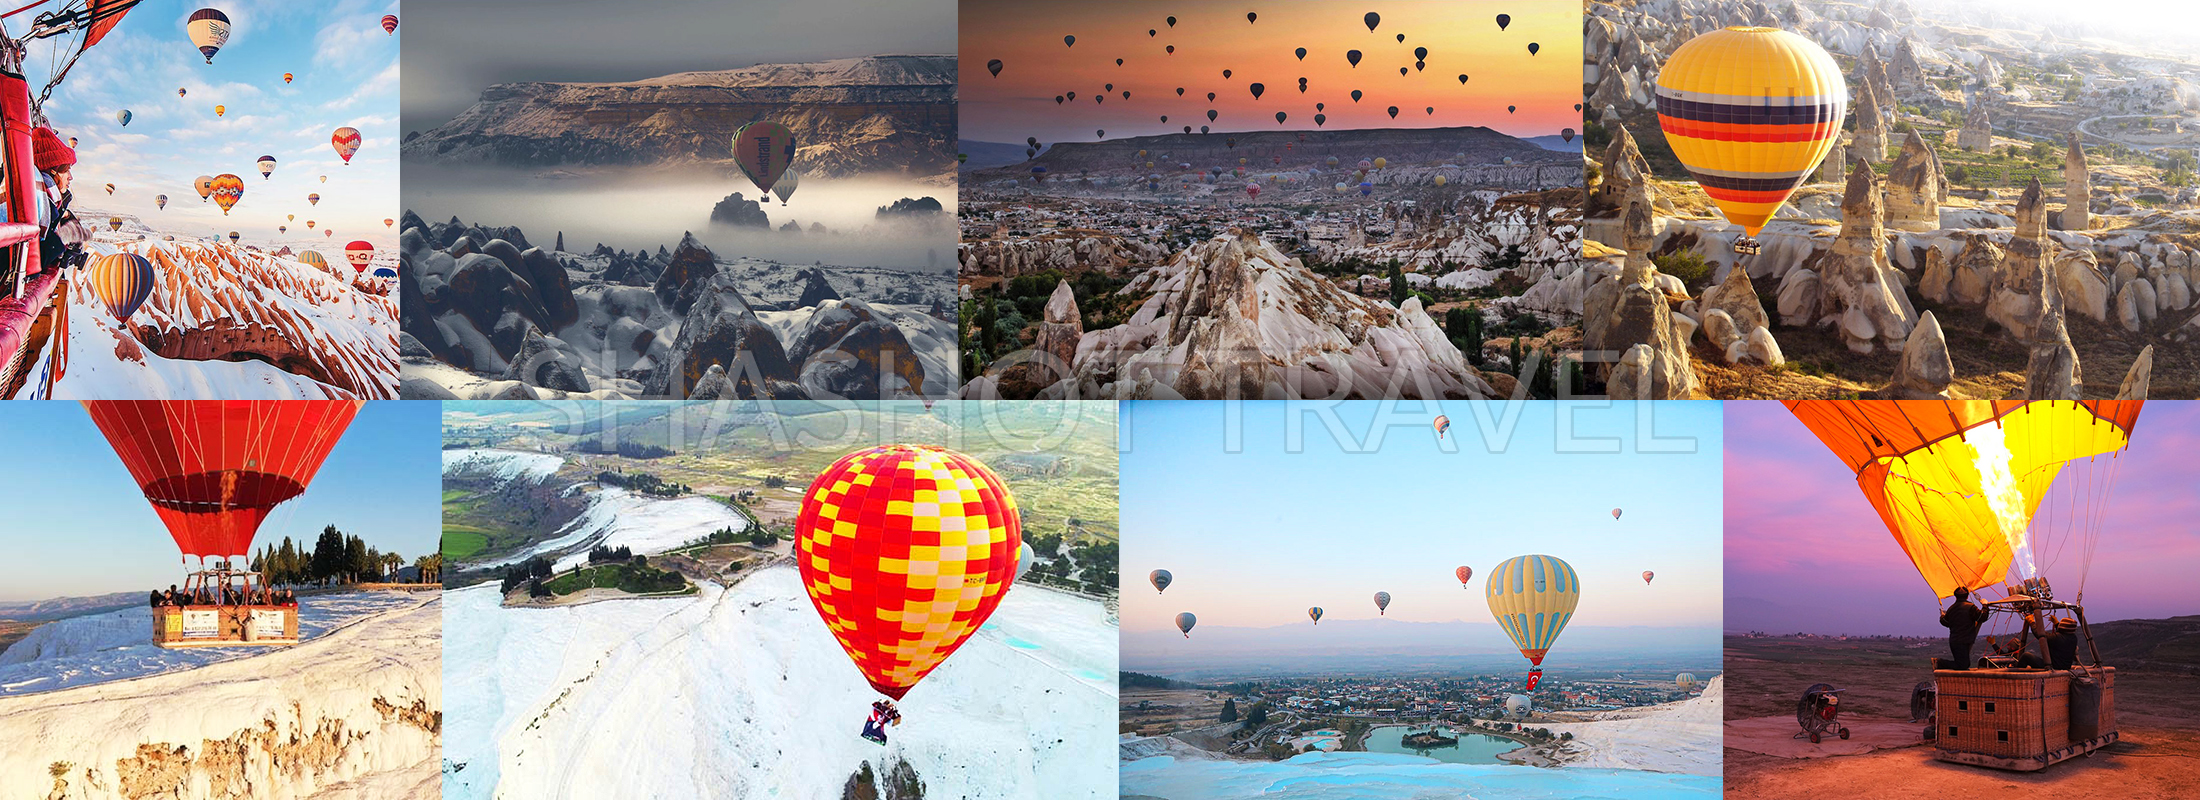 turkey-hot-air-balloon-tours-cappadocia-pamukkale